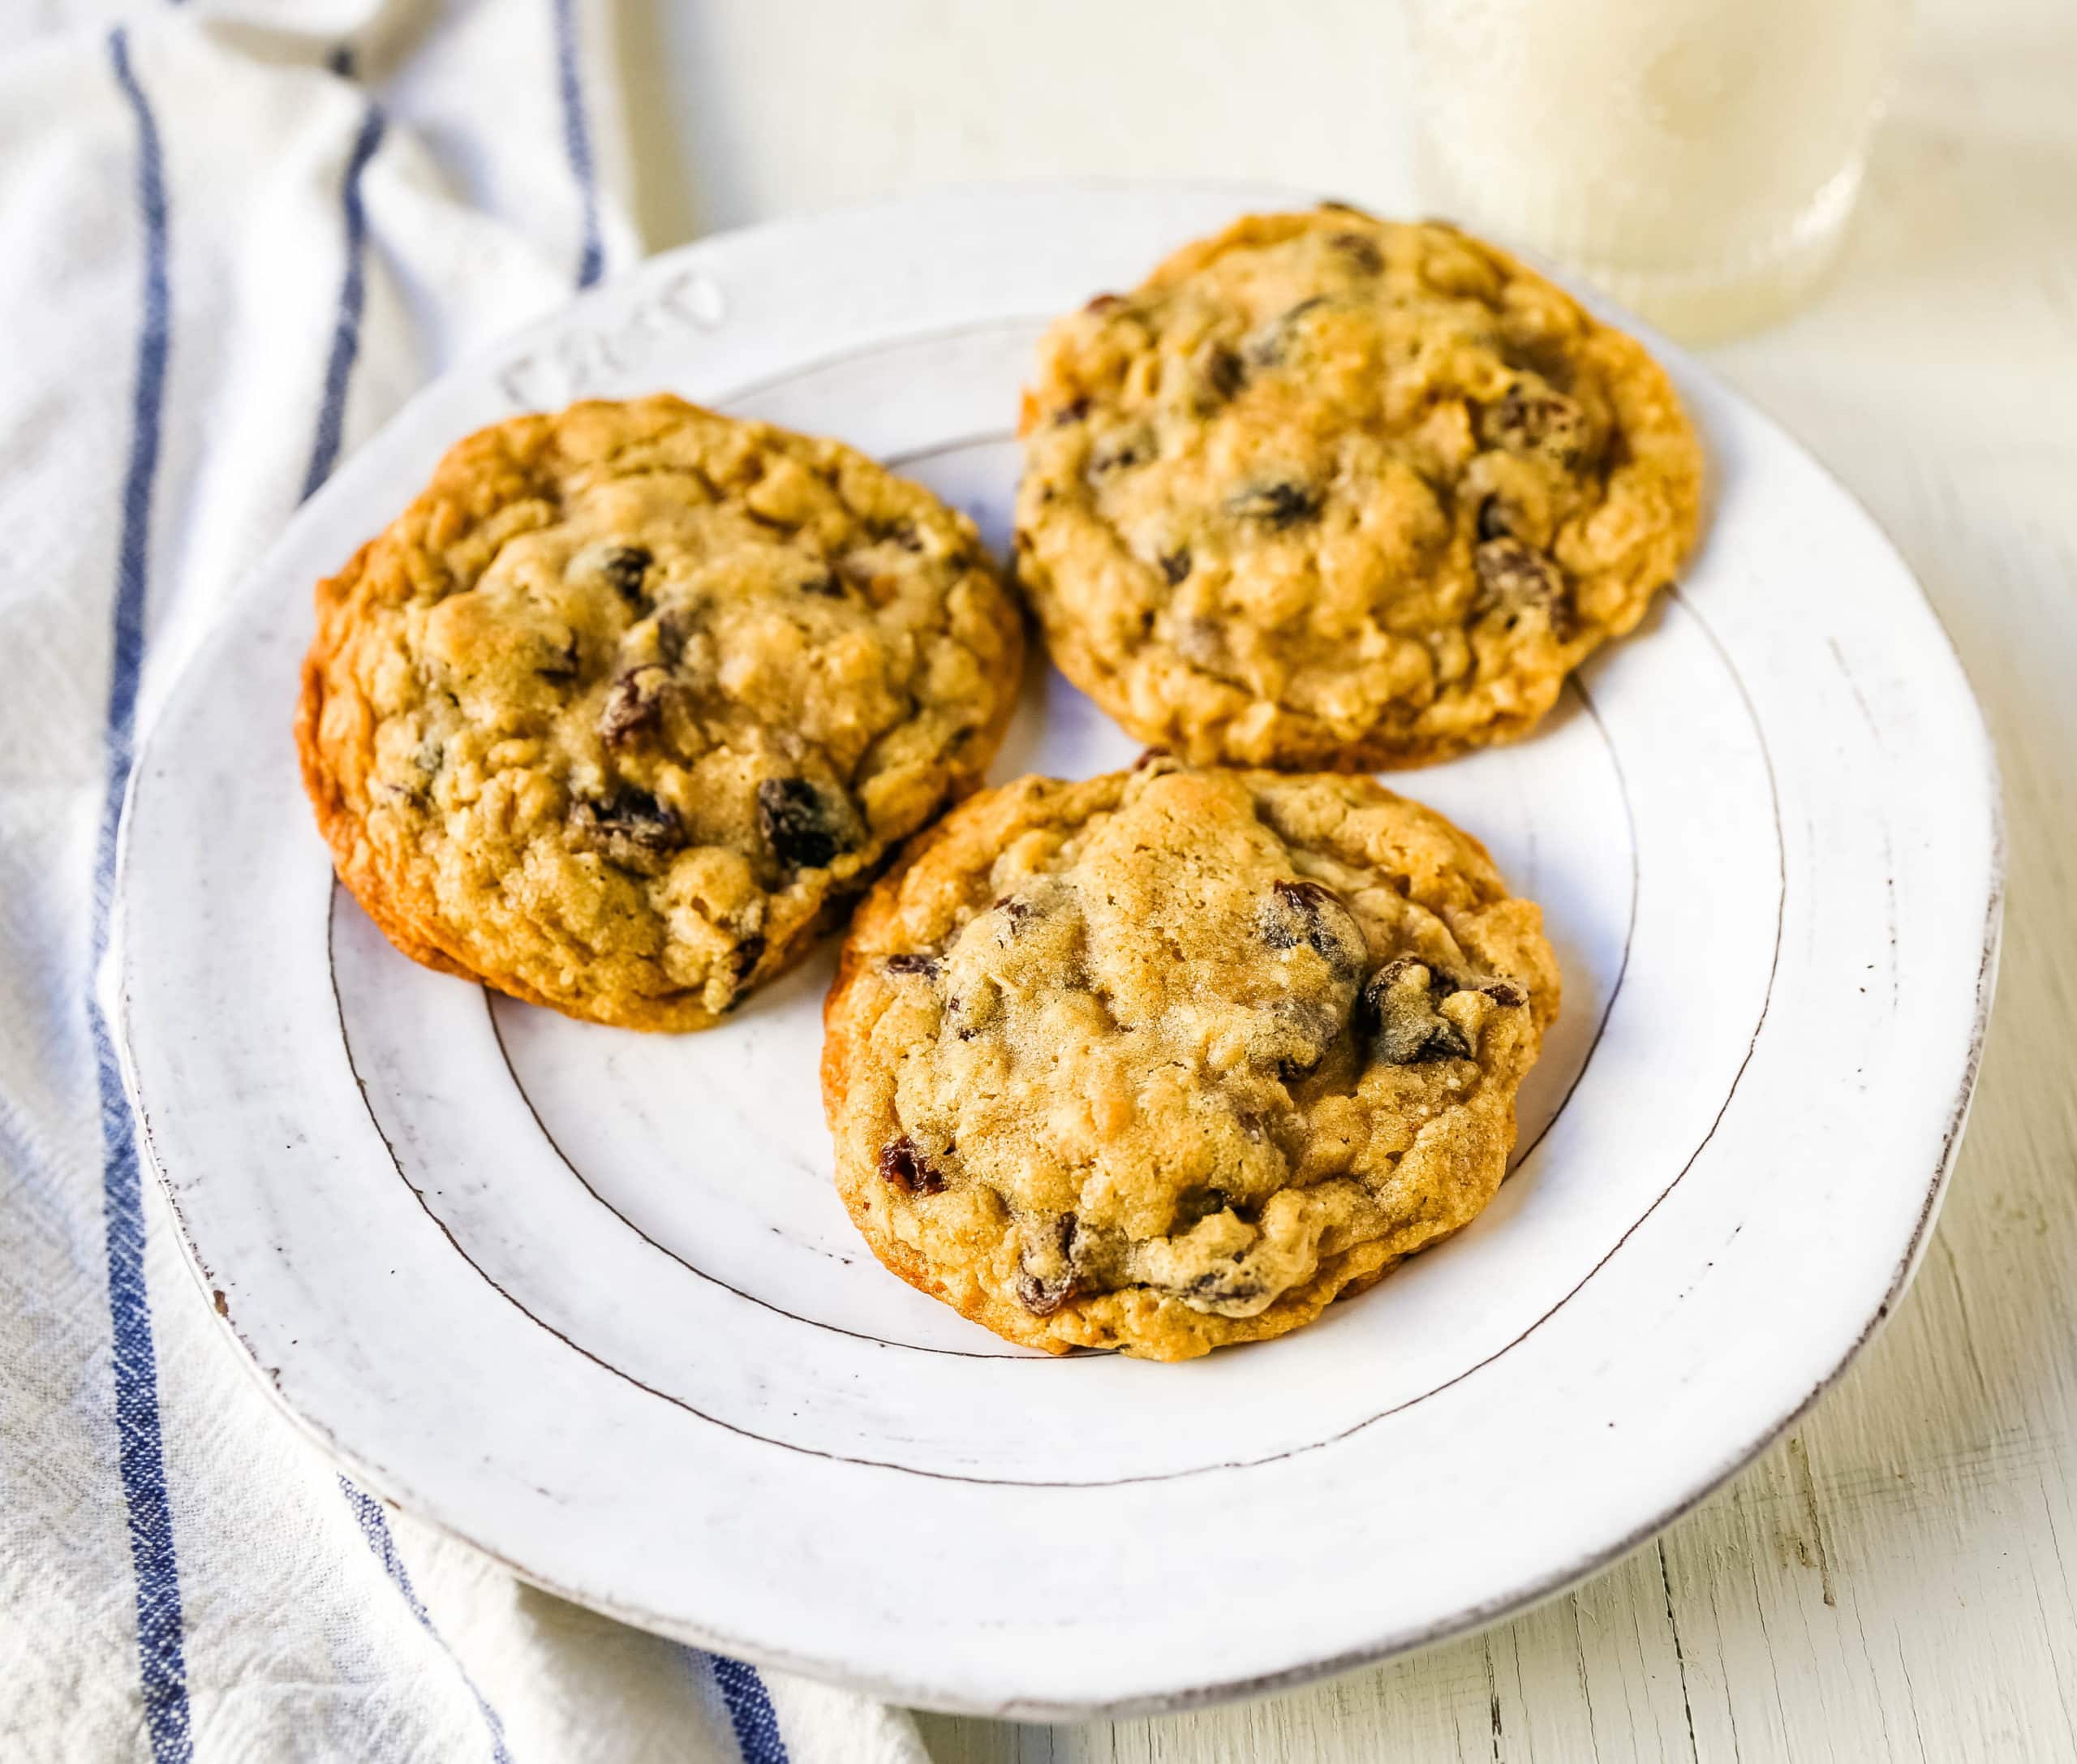 https://www.modernhoney.com/wp-content/uploads/2020/12/The-Best-Oatmeal-Raisin-Cookies-2-scaled.jpg